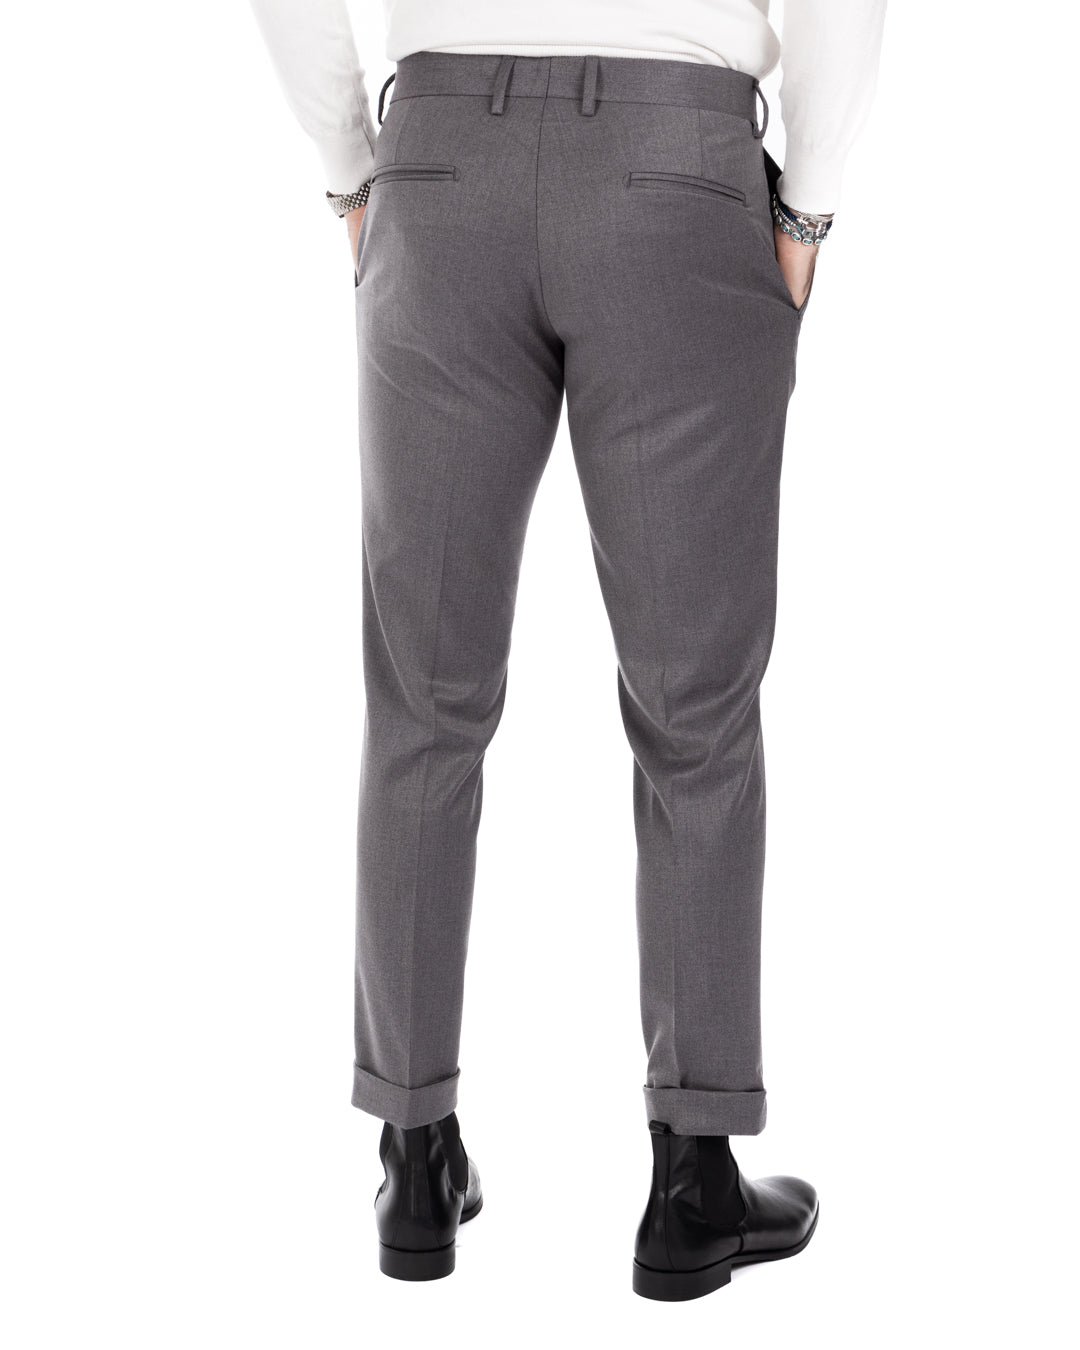 Leo - gray high waisted trousers